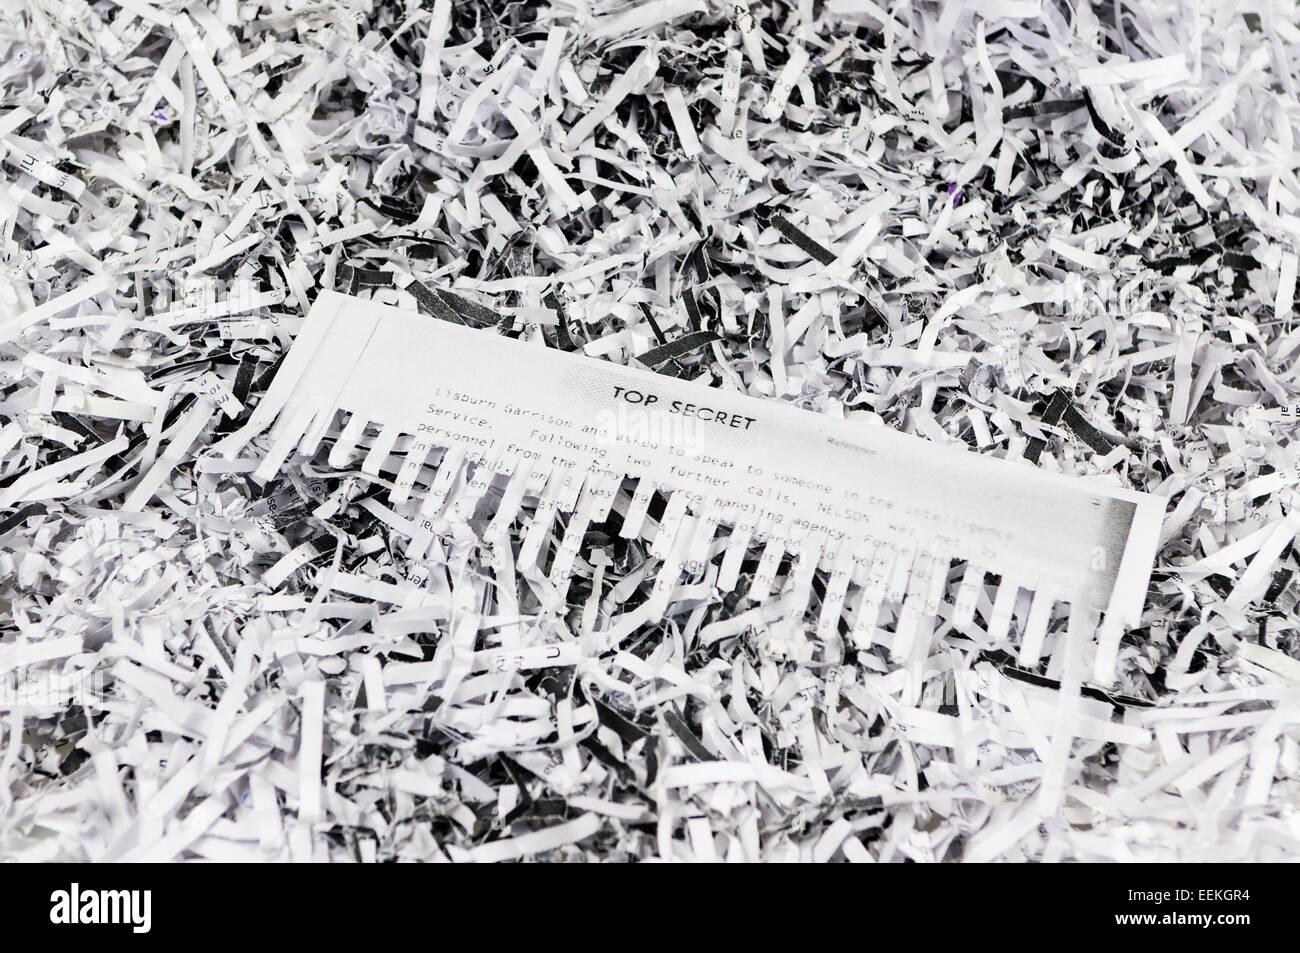 Half Shredded Top Secret Classified Uk Government Correspondence Stock Photo Alamy